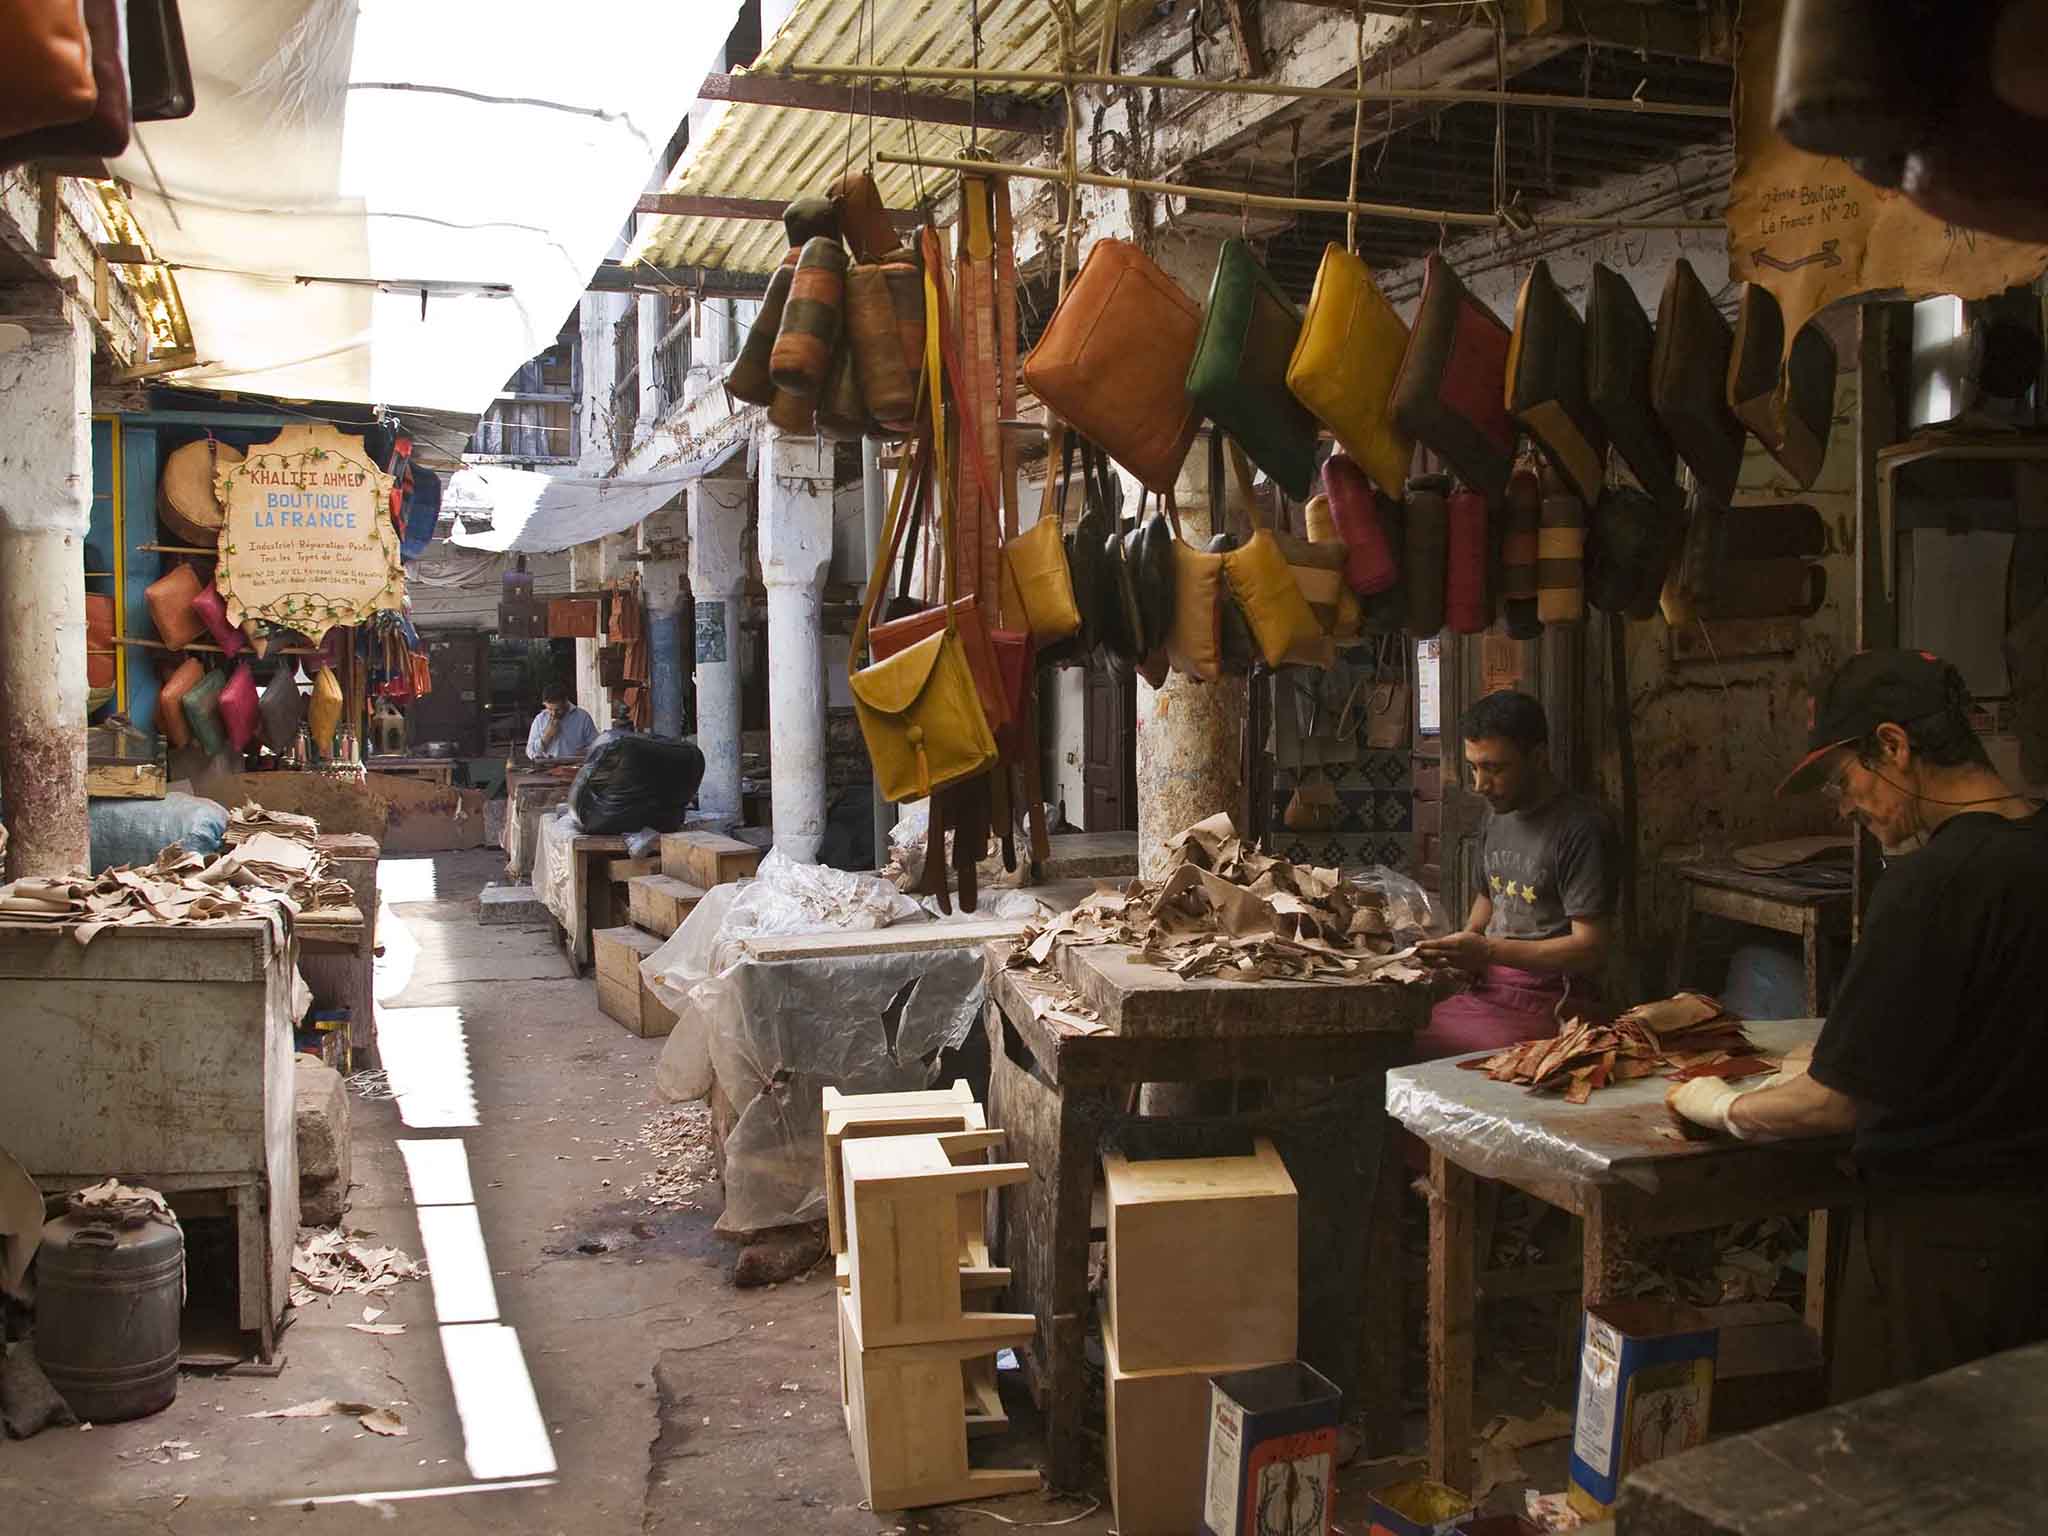 market in Morocco